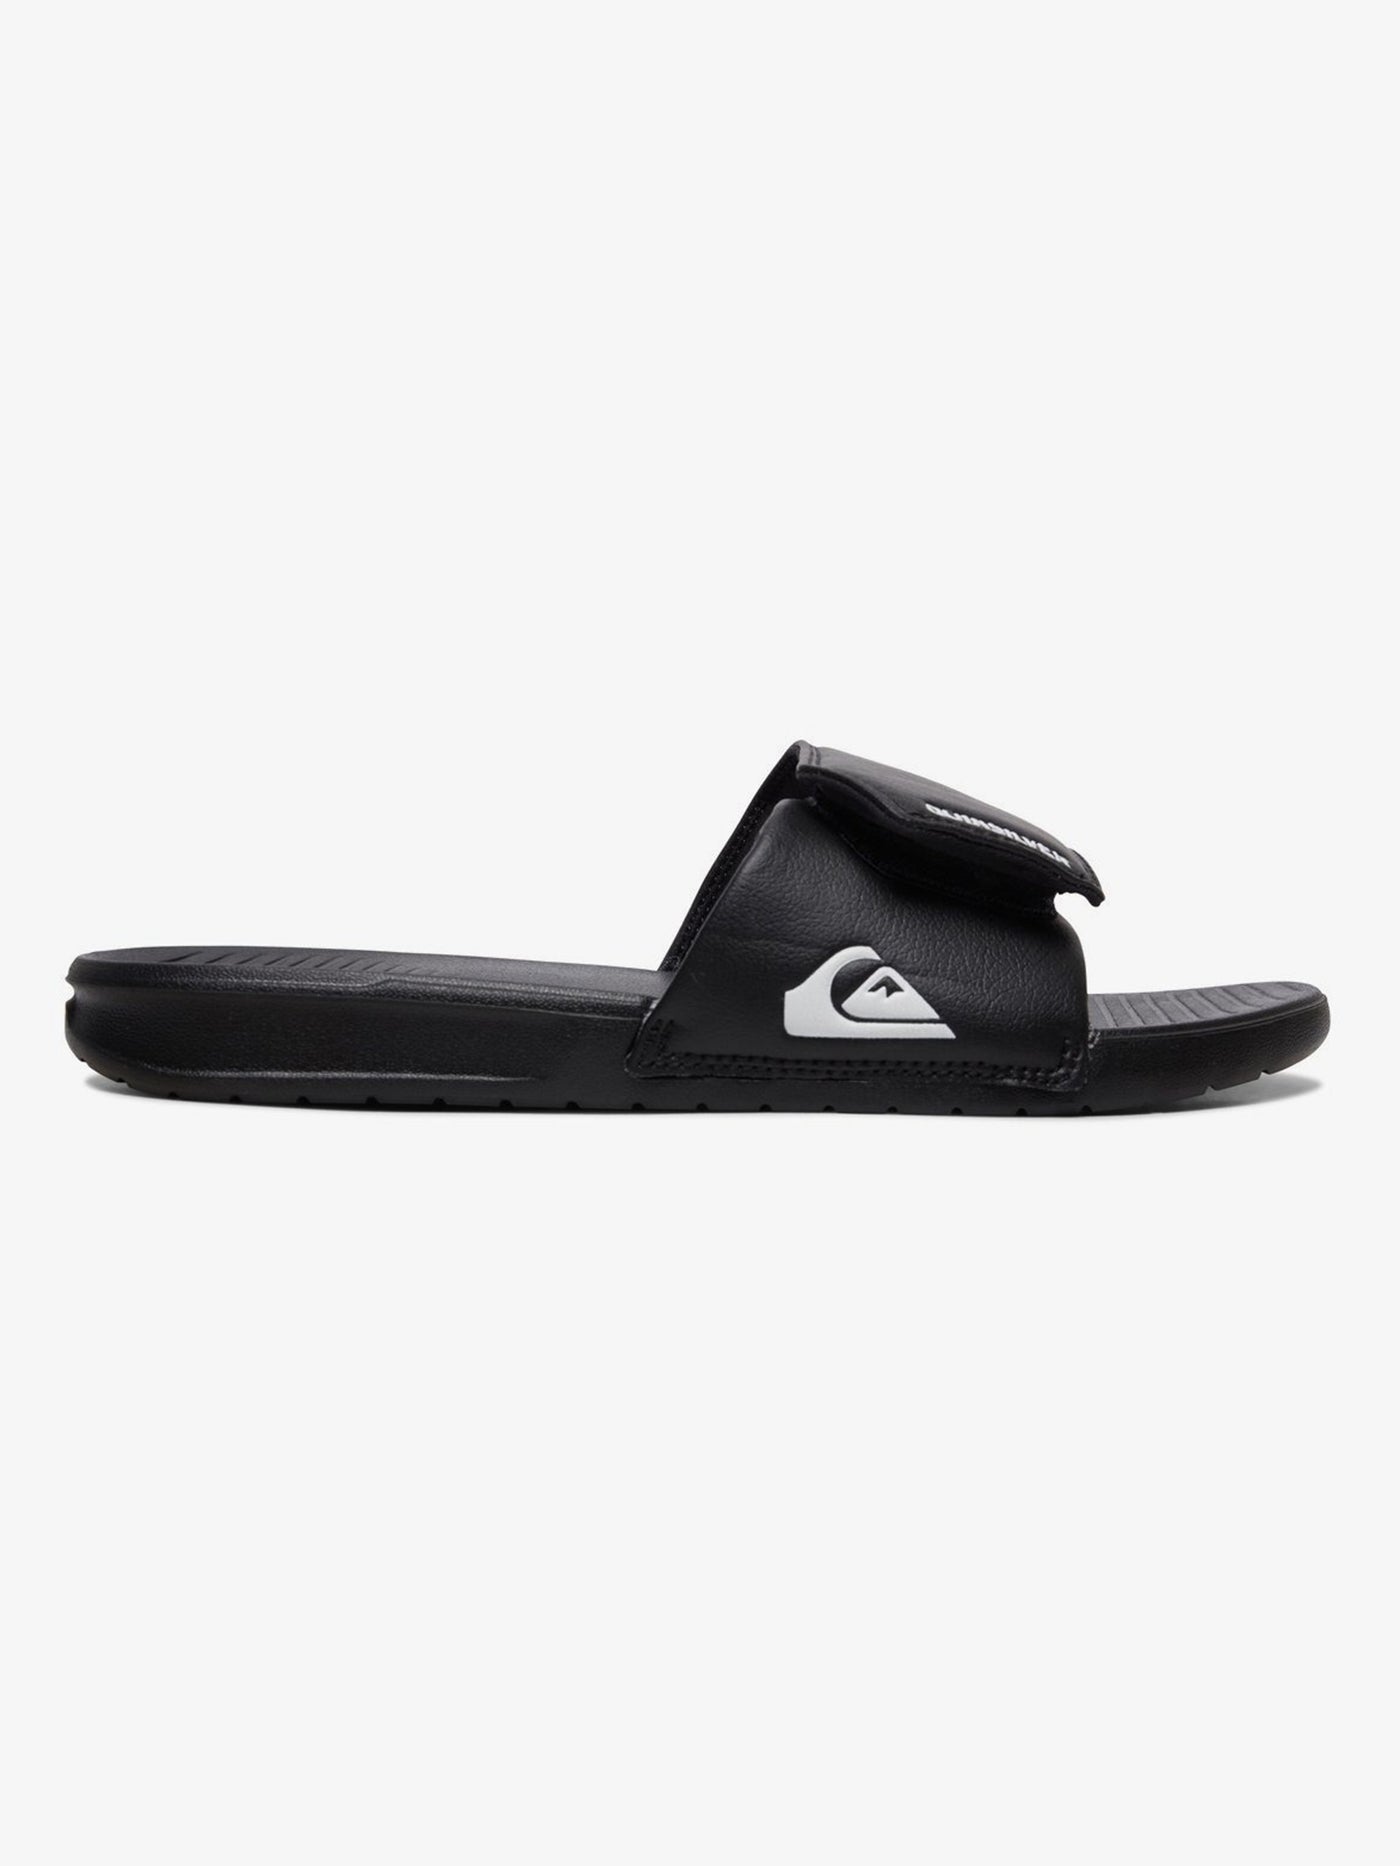 Quiksilver Bright Coast Adjust Black/White/Black Sandals